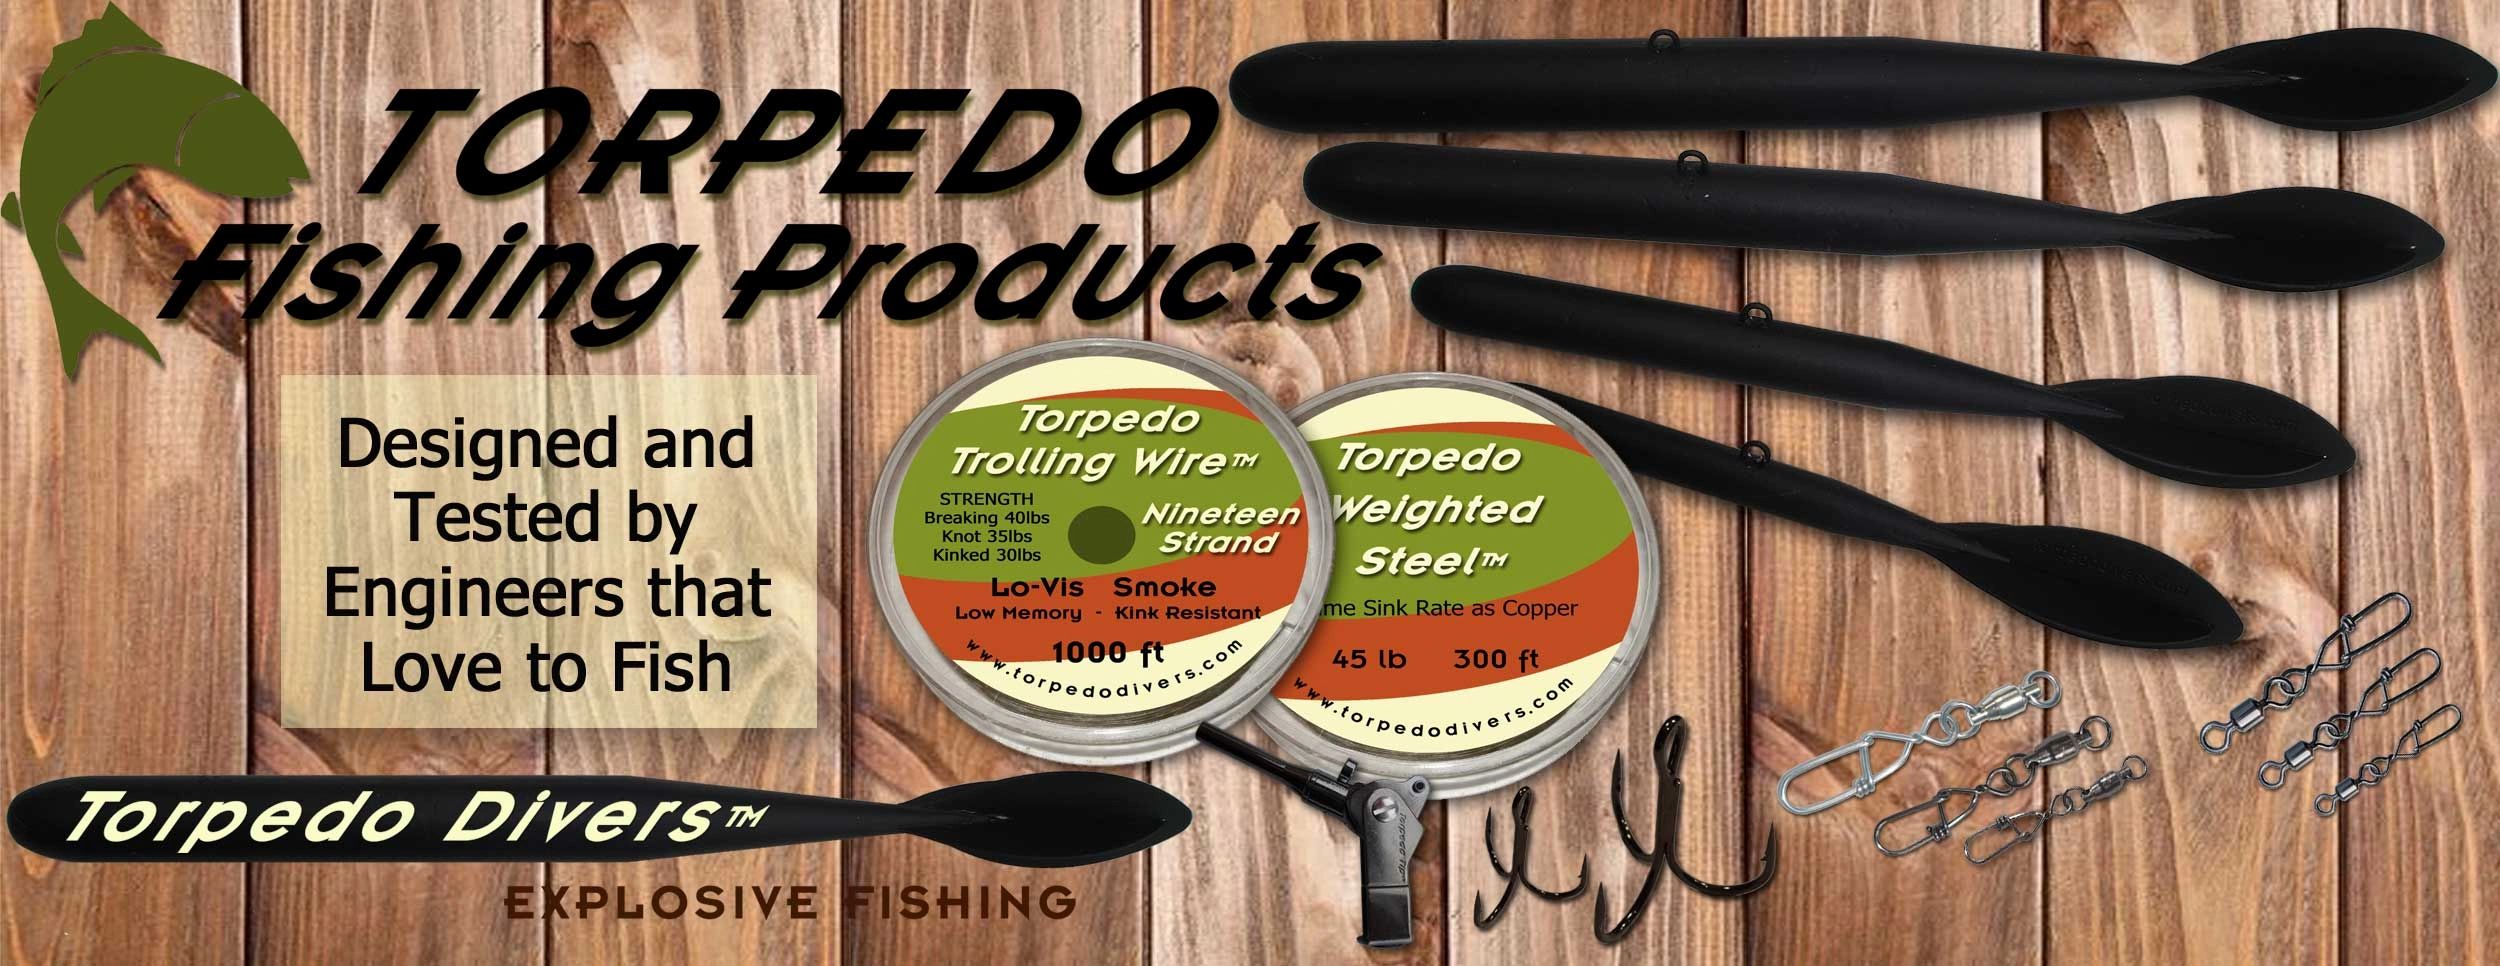 Torpedofishingproducts